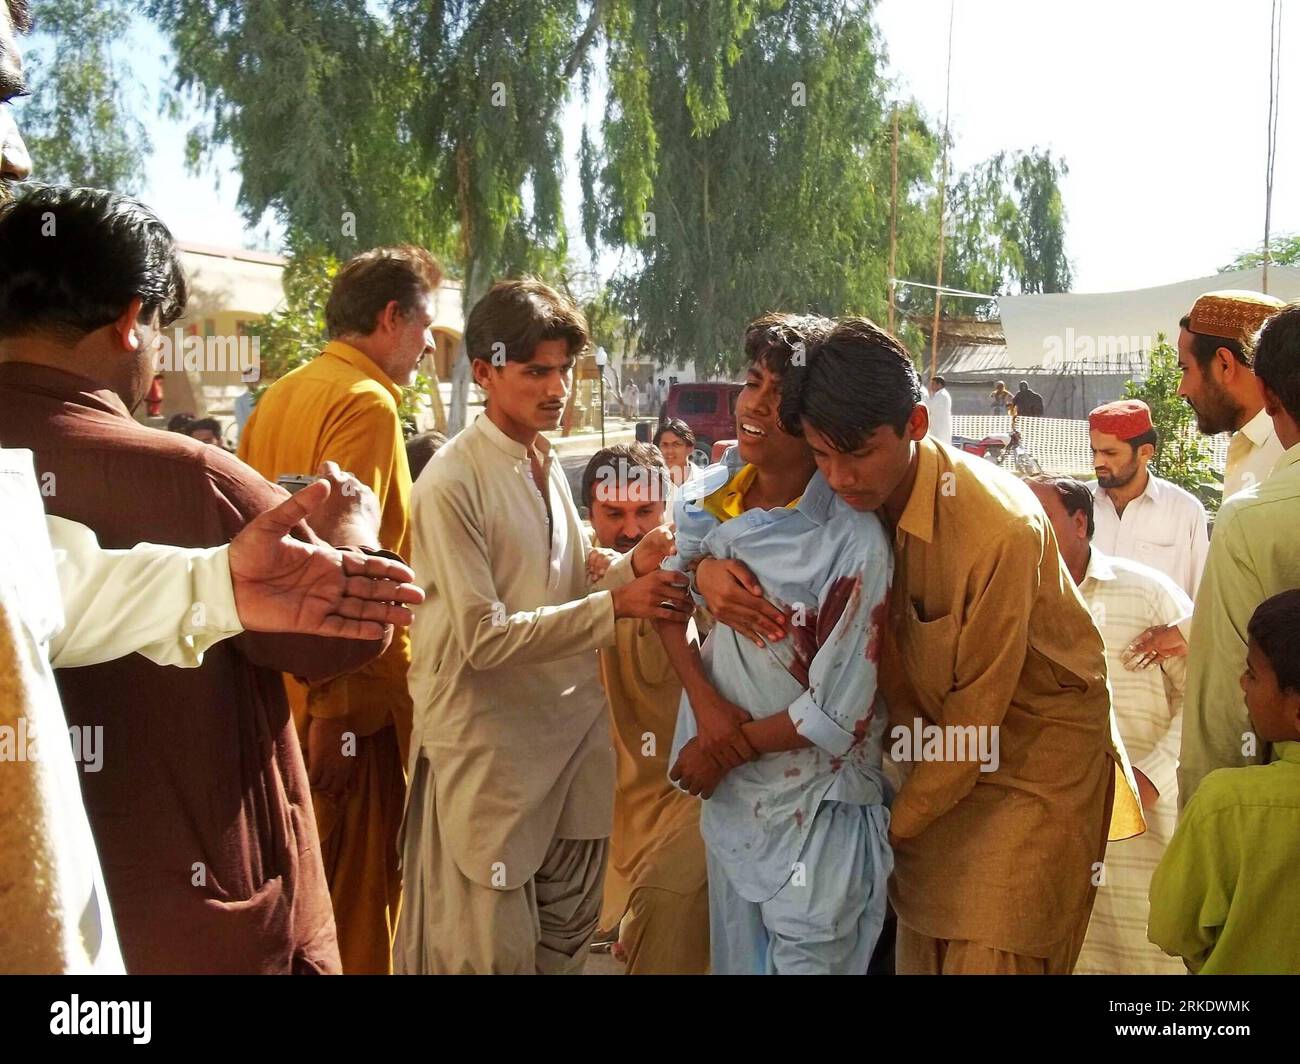 Bildnummer: 55011802  Datum: 10.03.2011  Copyright: imago/Xinhua DERA MURAD JAMALI, March 10, 2011 (Xinhua) -- help an injured person from the blast site in southwest Pakistan s Dera Murad Jamali, on March 10, 2011. At least one was killed and 14 others injured in a blast that occurred Thursday afternoon in Pakistan s southwest province of Balochistan, reported local Urdu TV channel Geo. (Xinhua/Iqbal Hussain) (lr) PAKISTAN-DERA MURAD JAMALI-BLAST PUBLICATIONxNOTxINxCHN Gesellschaft Anschlag Explosion premiumd kbdig xkg 2011 quer o0 Opfer verletzt    Bildnummer 55011802 Date 10 03 2011 Copyrig Stock Photo